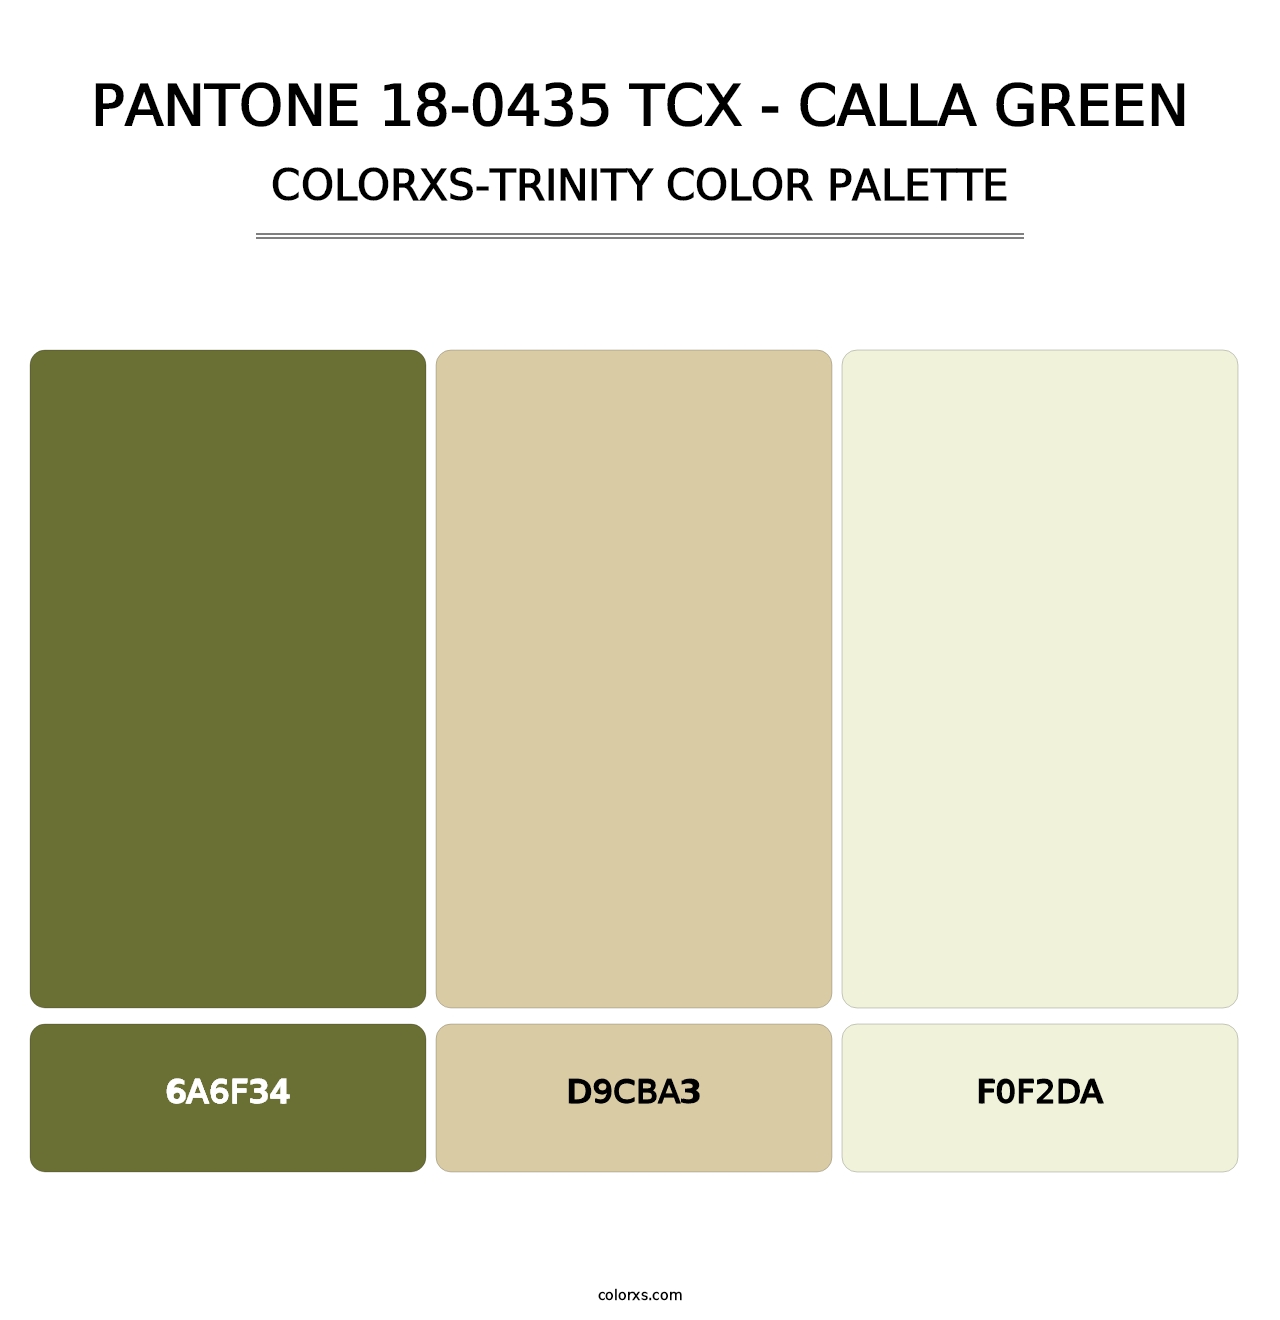 PANTONE 18-0435 TCX - Calla Green - Colorxs Trinity Palette